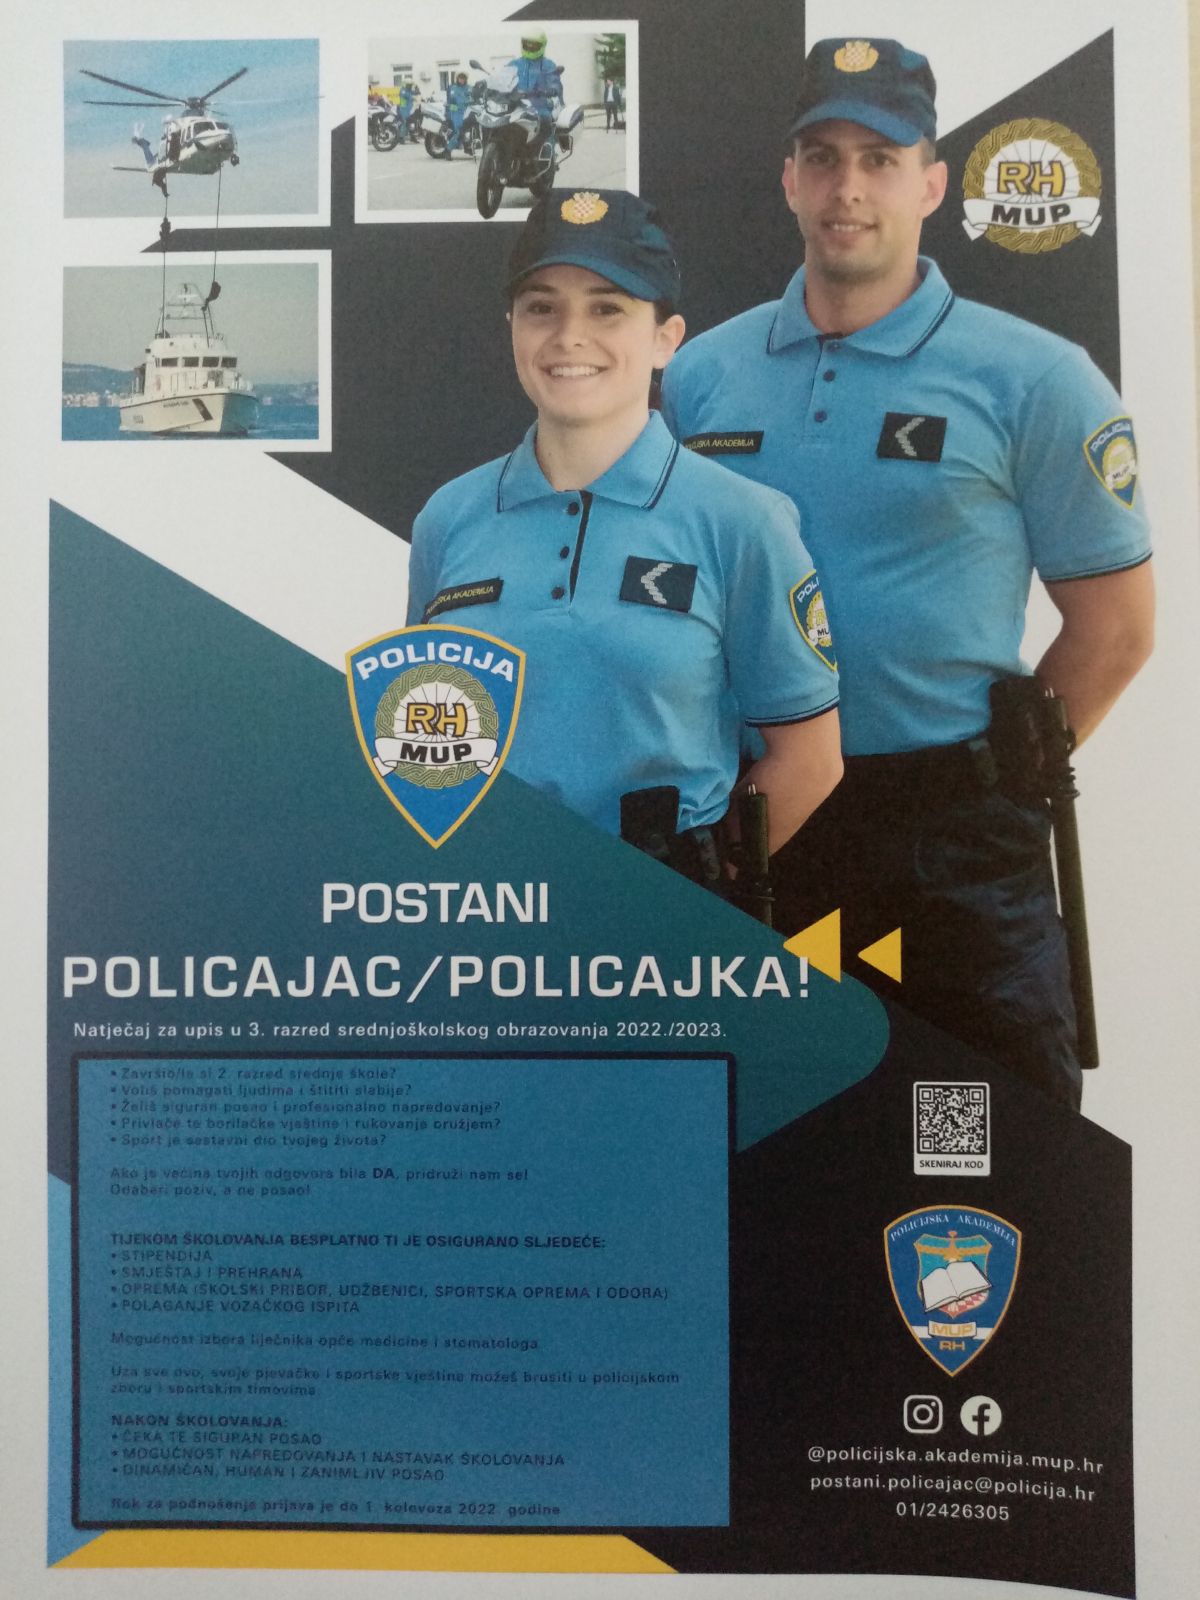 Plakat postani policajac policajka